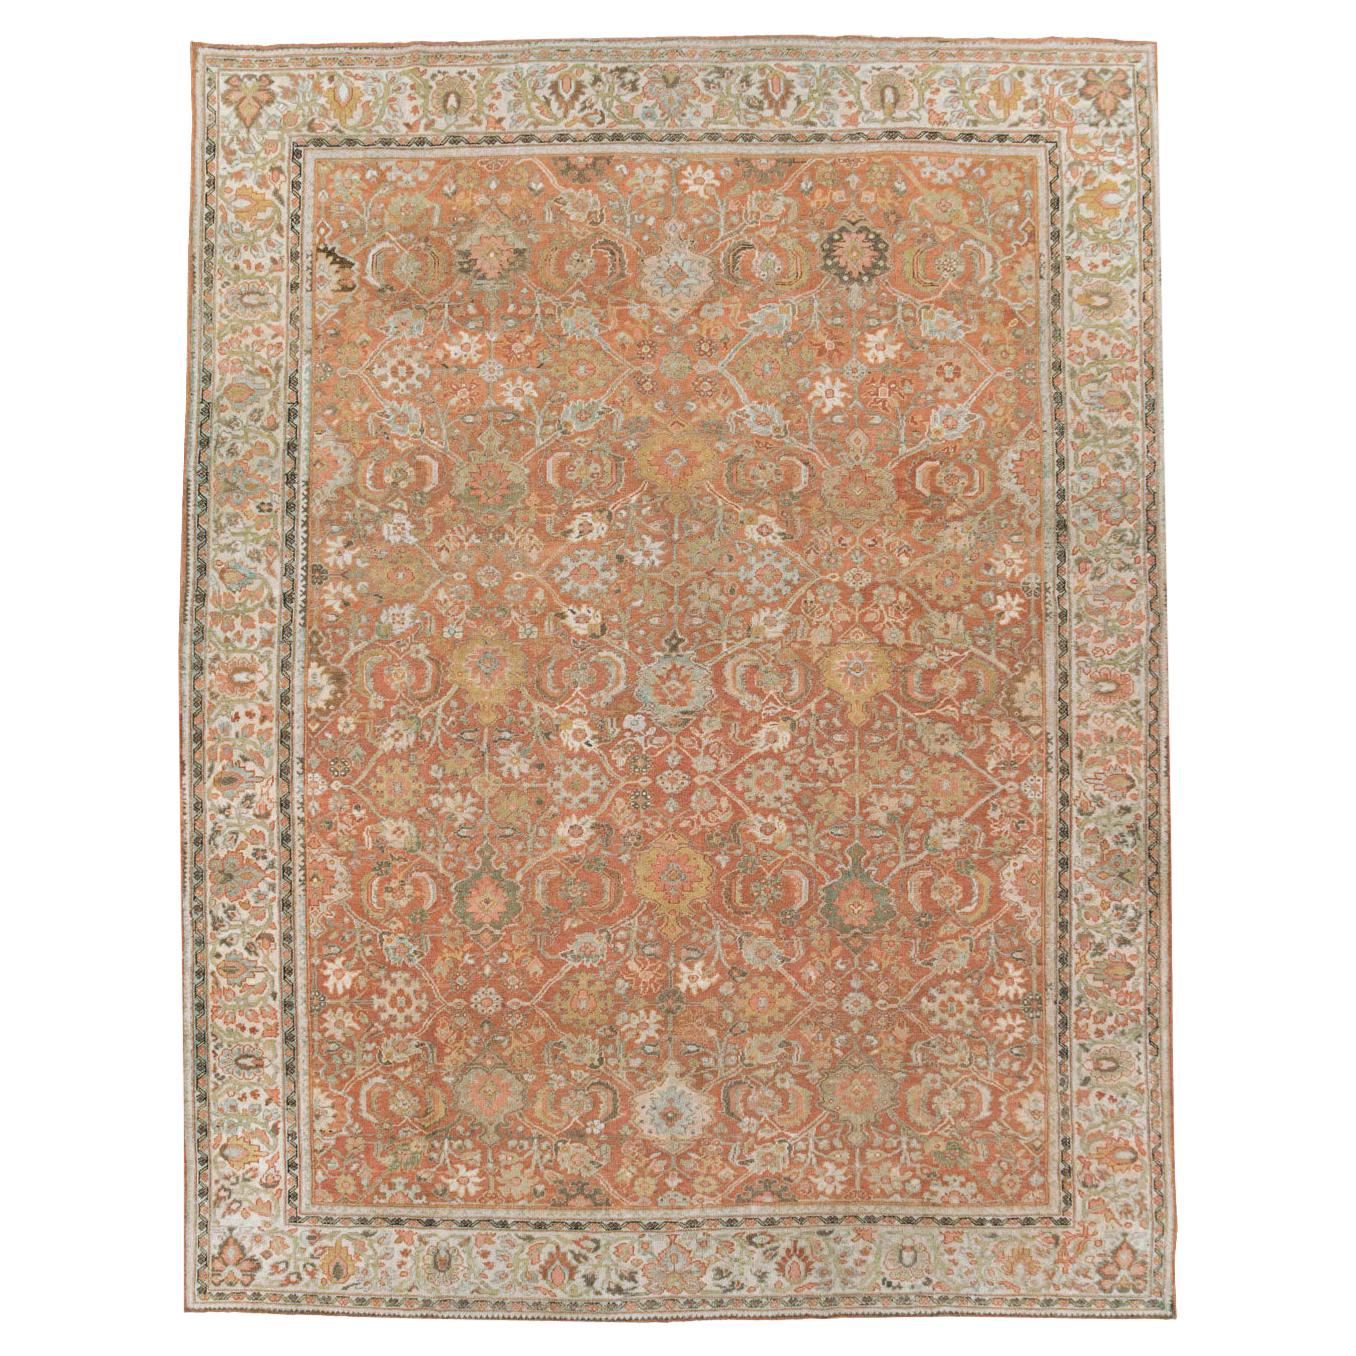 Early 20th Century Handmade Persian Mahal Room Size Carpet